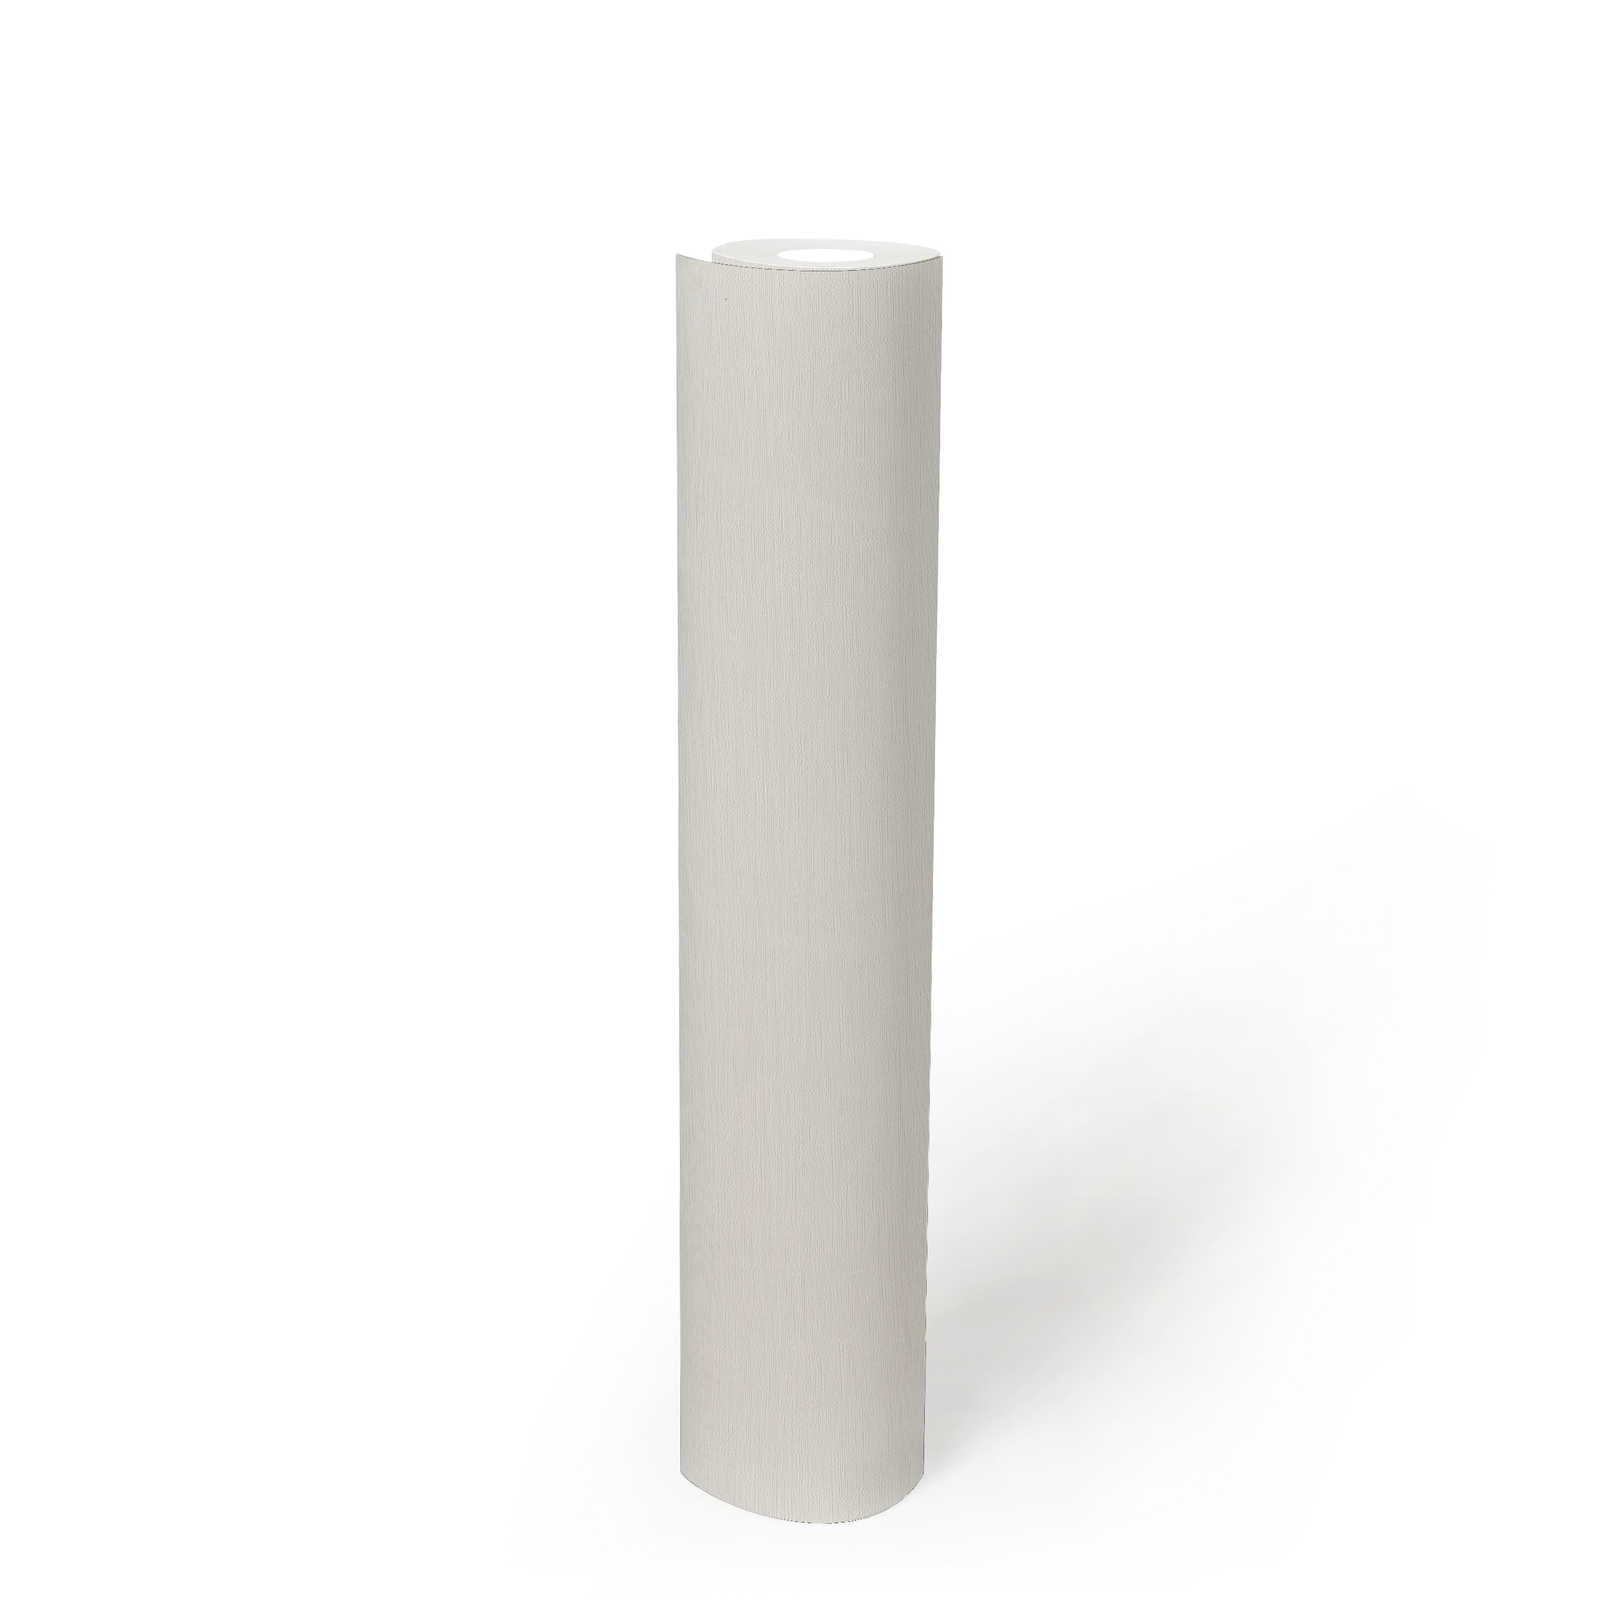             Plain wallpaper white matt with structure design in plaster look
        